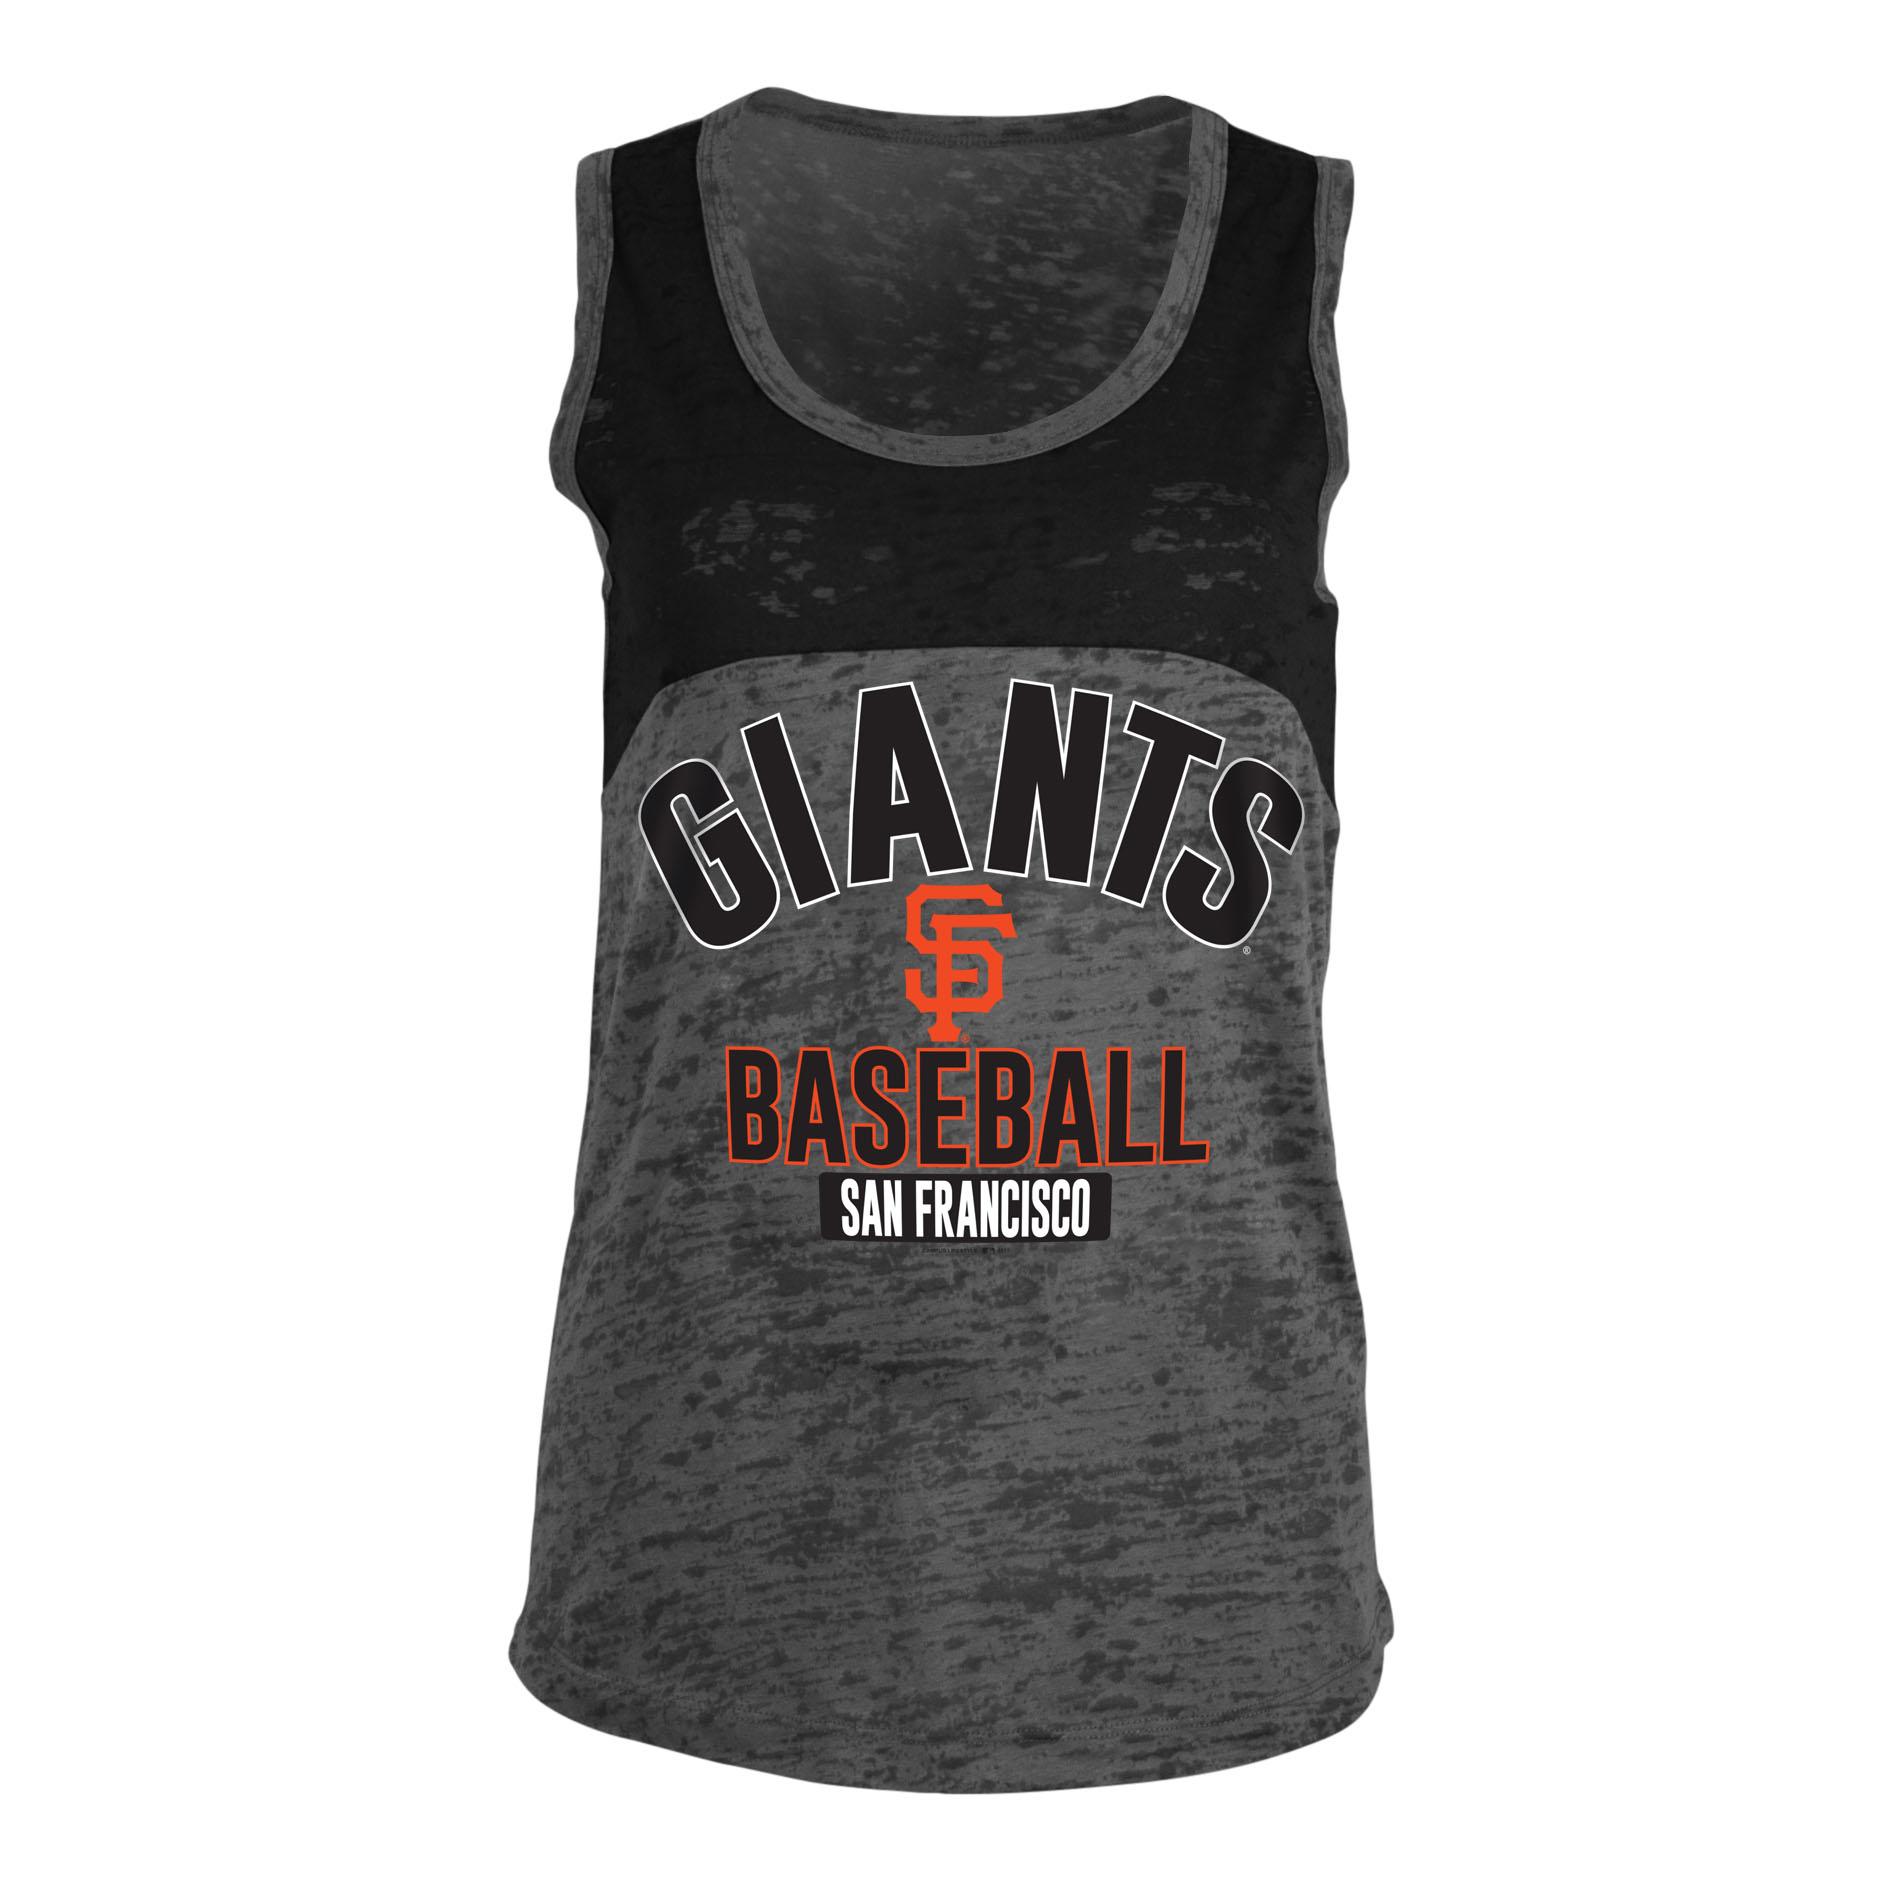 MLB Women's Graphic Tank Top - San Francisco Giants